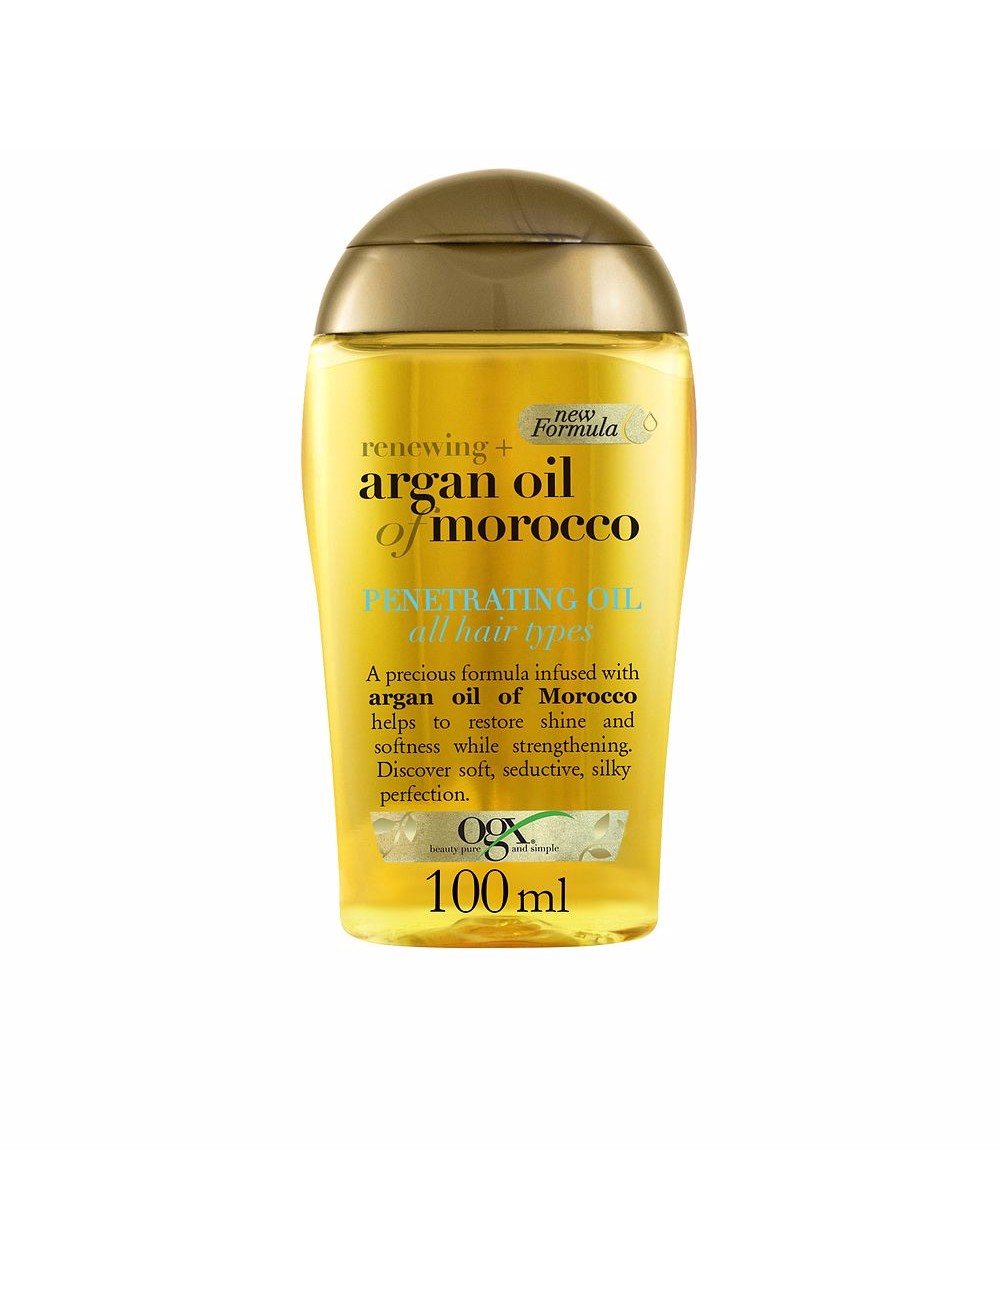 PENETRATING dry hair argan oil 100 ml